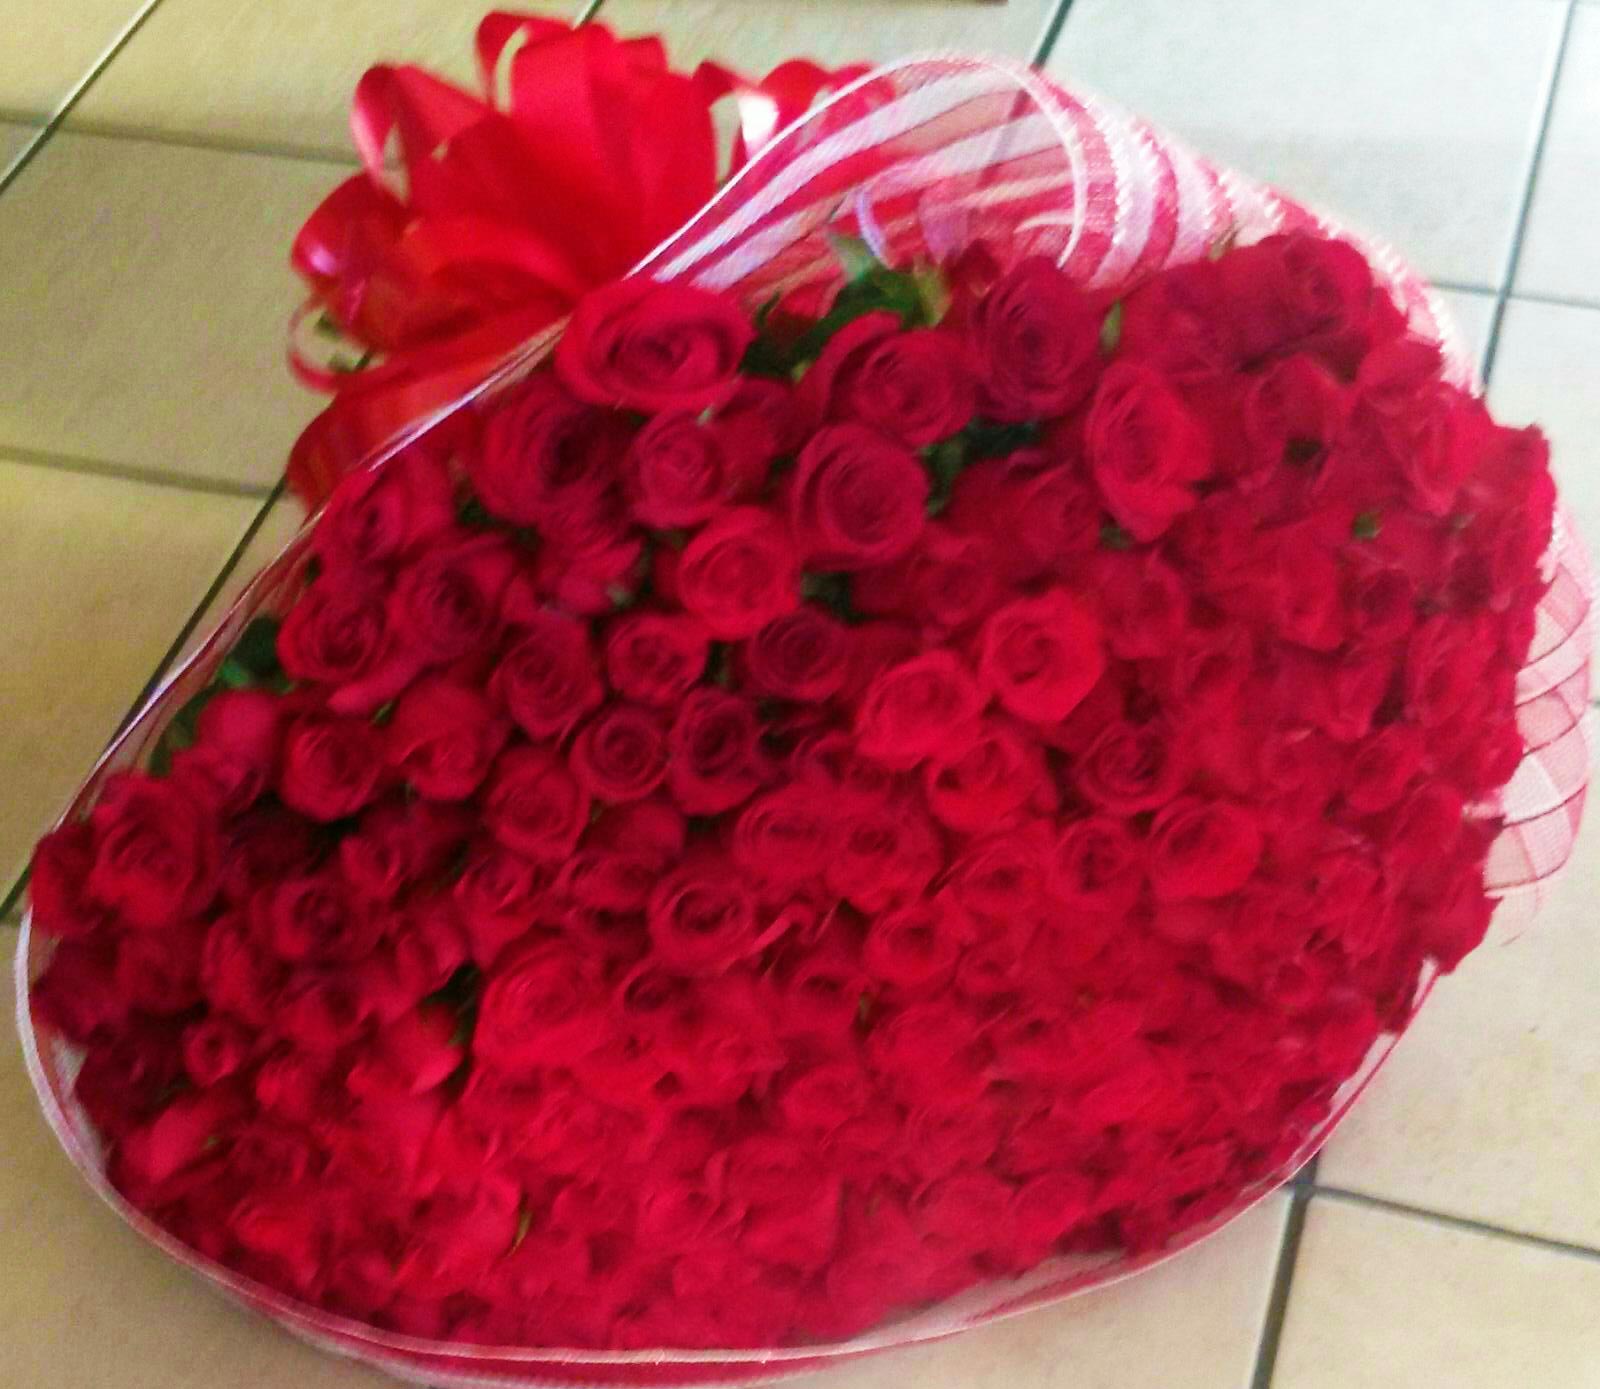 Bouquet con 200 Rosas - Florería D'Grace